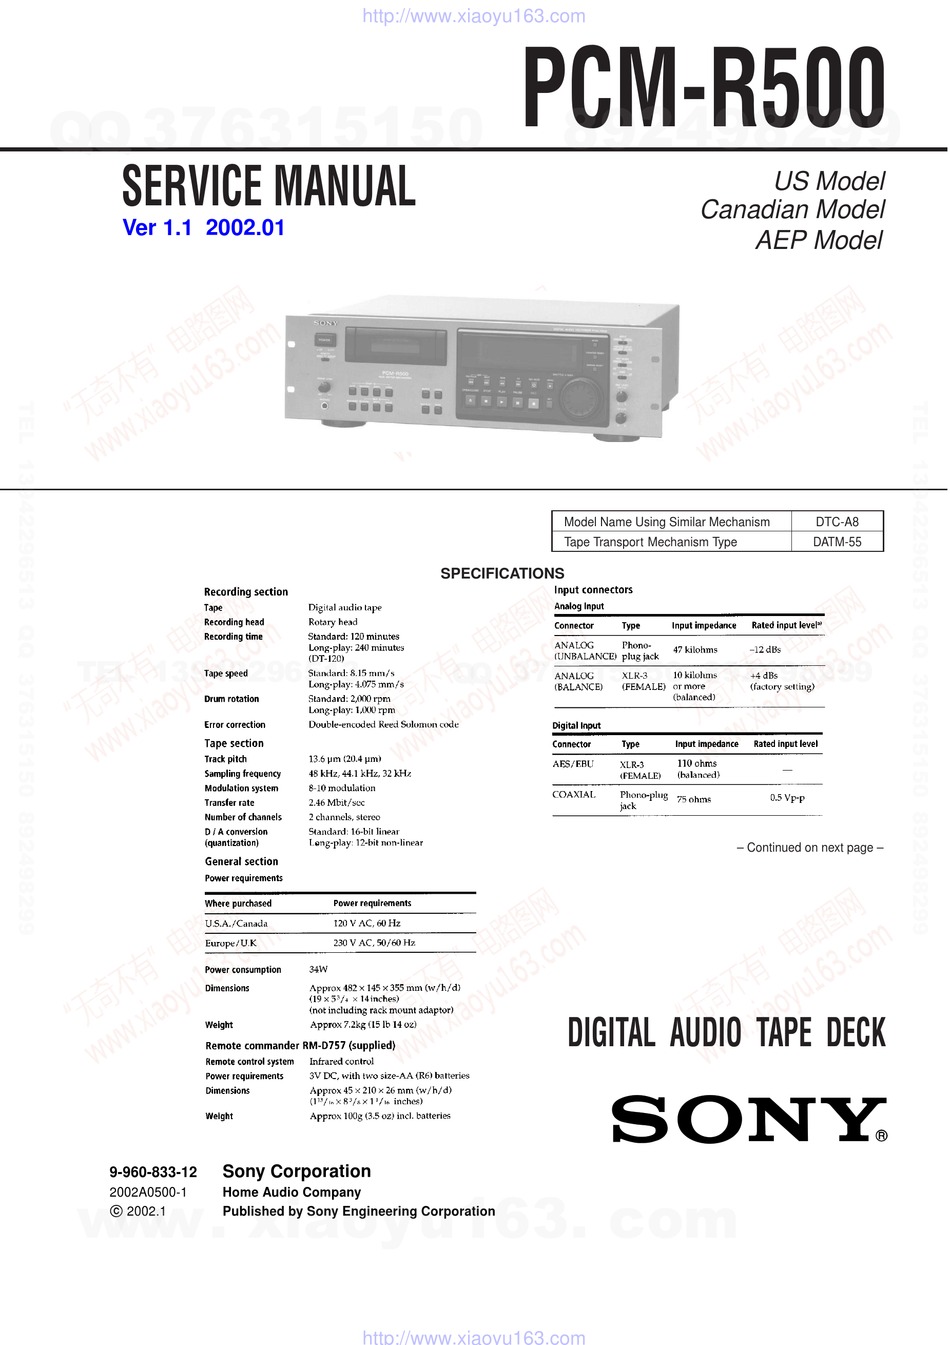 SONY PCM-R500 SERVICE MANUAL Pdf Download | ManualsLib